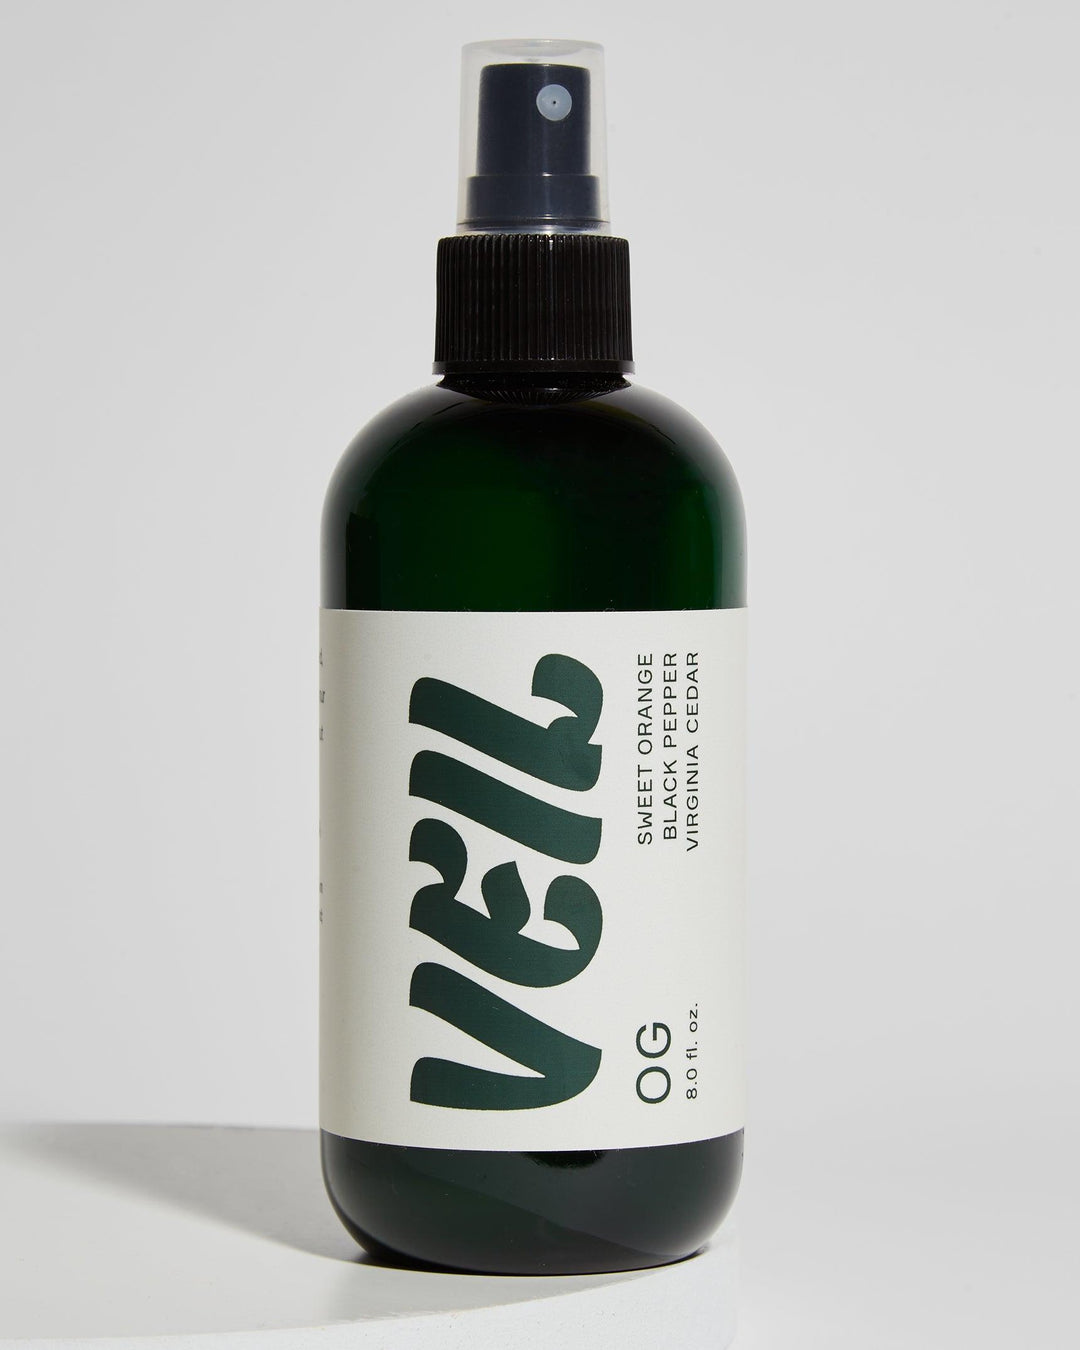 veil 8 oz cannabis odor eliminator spray bottle